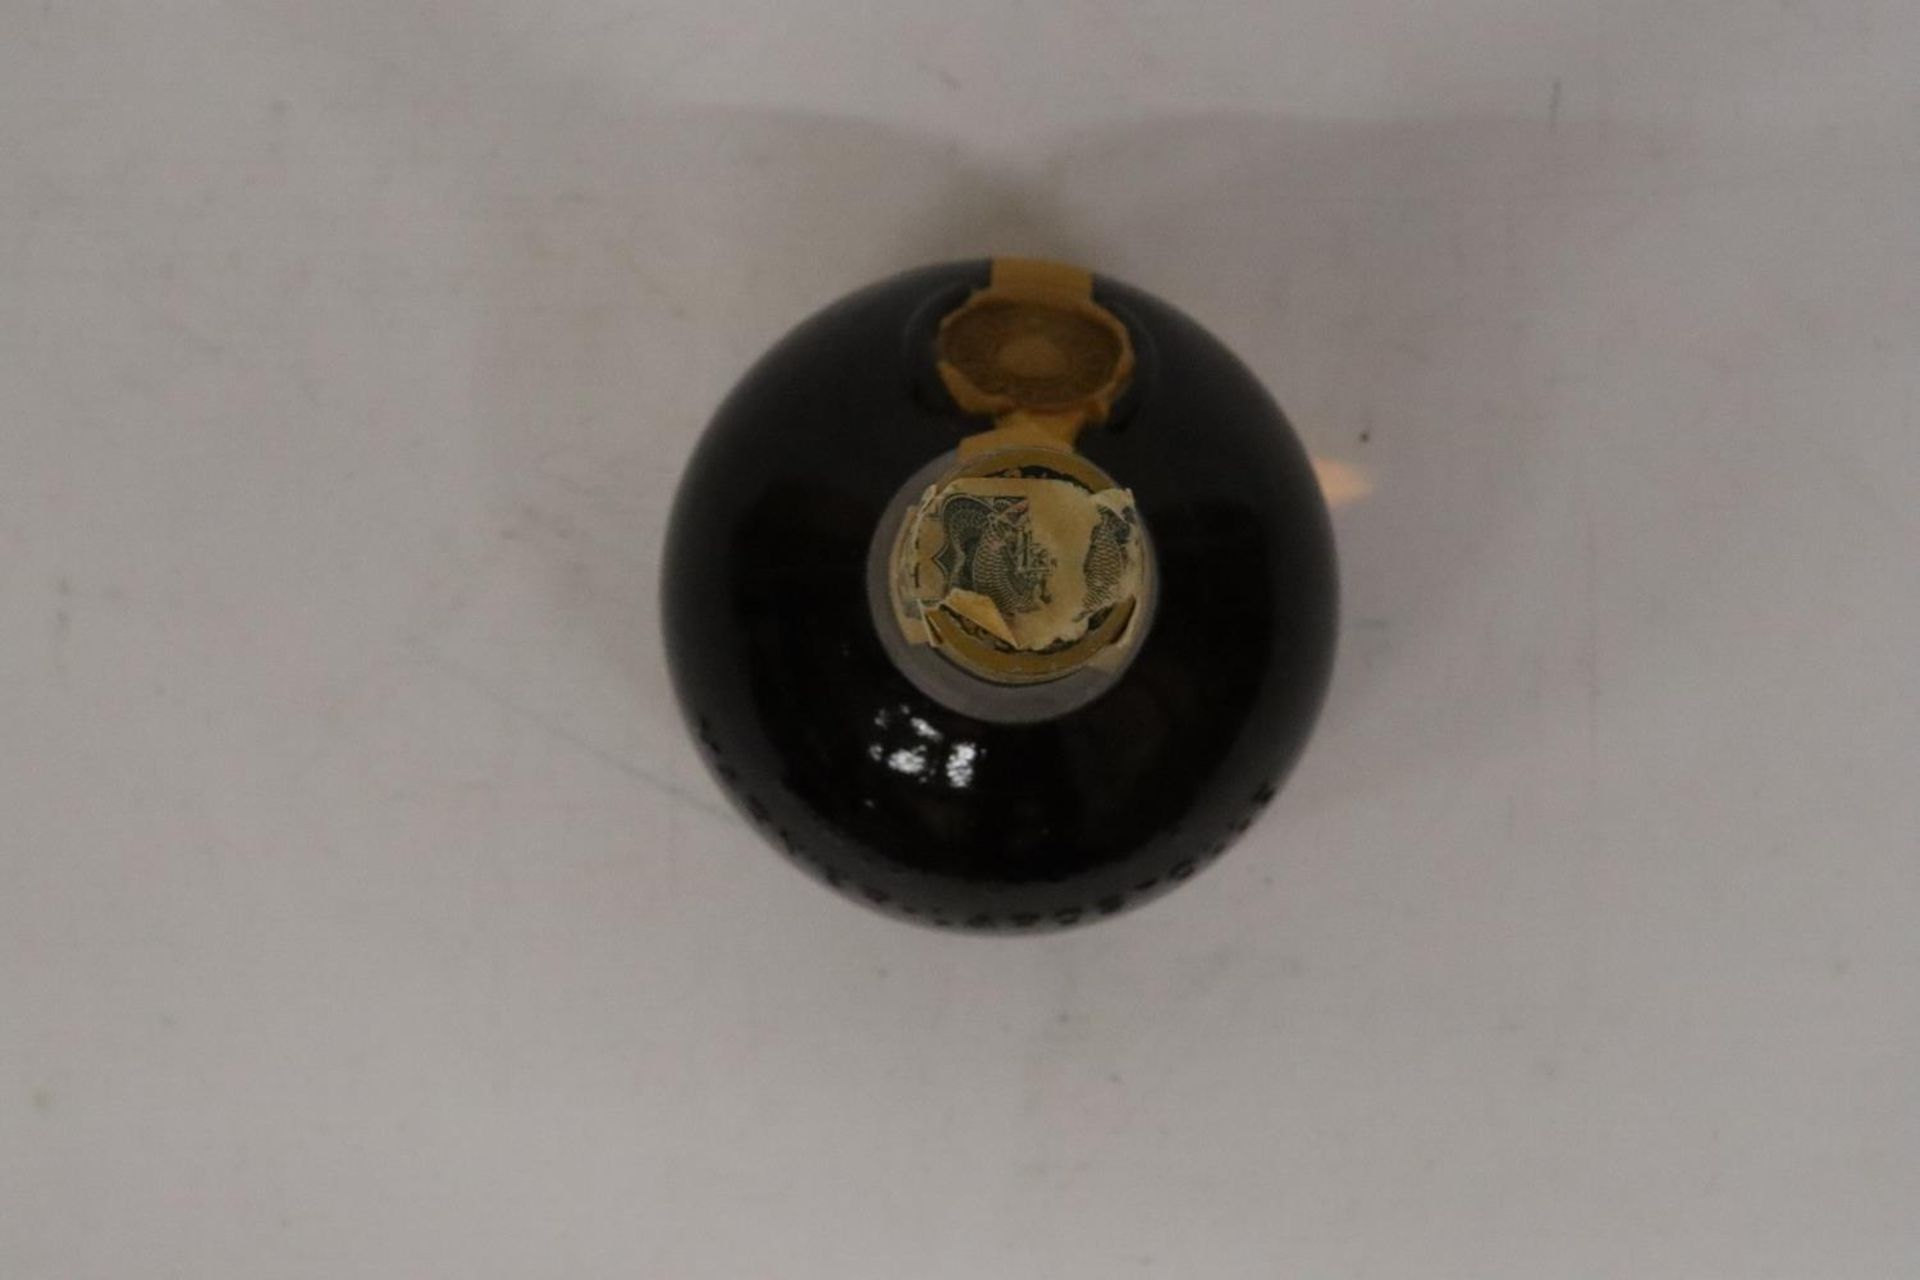 A 75CL BOTTLE OF GRAND MARNIER LIQUOR - Image 3 of 3